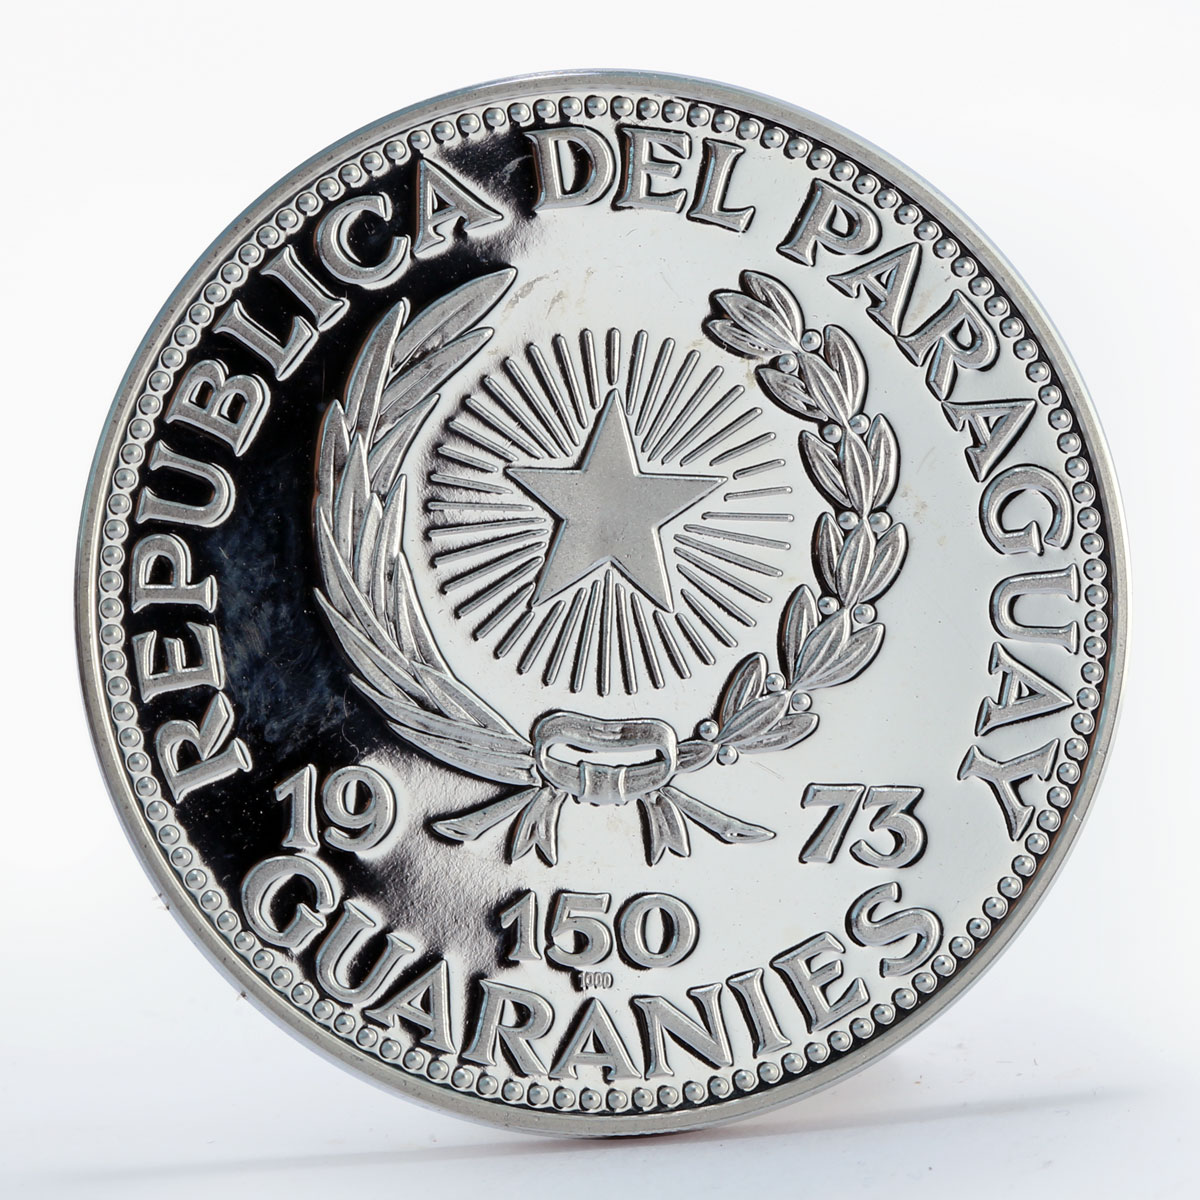 Paraguay 150 guaranies Veracruz Culture Sculpture proof silver coin 1973